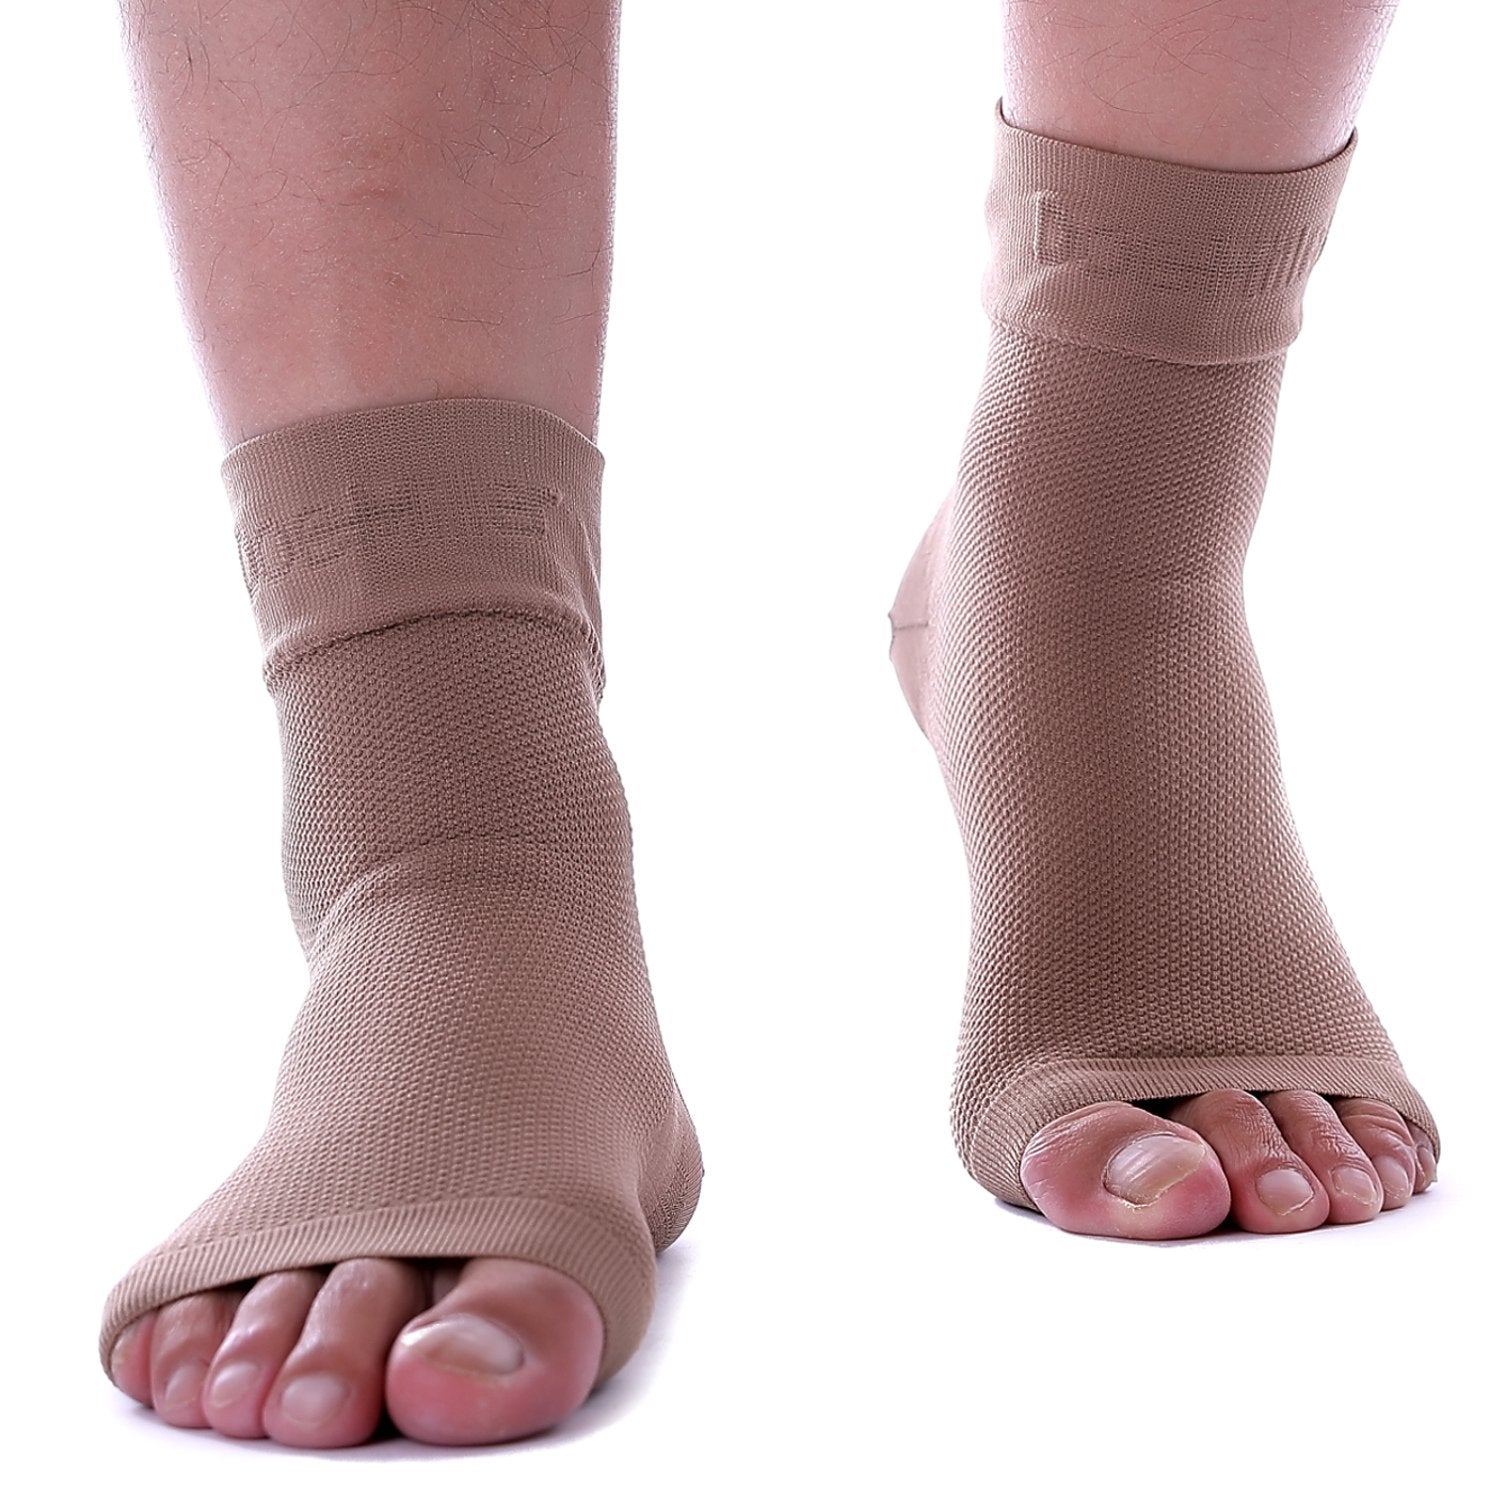 Doc Miller Plantar Fasciitis 30-40 mmHg Medical Grade Compression Foot